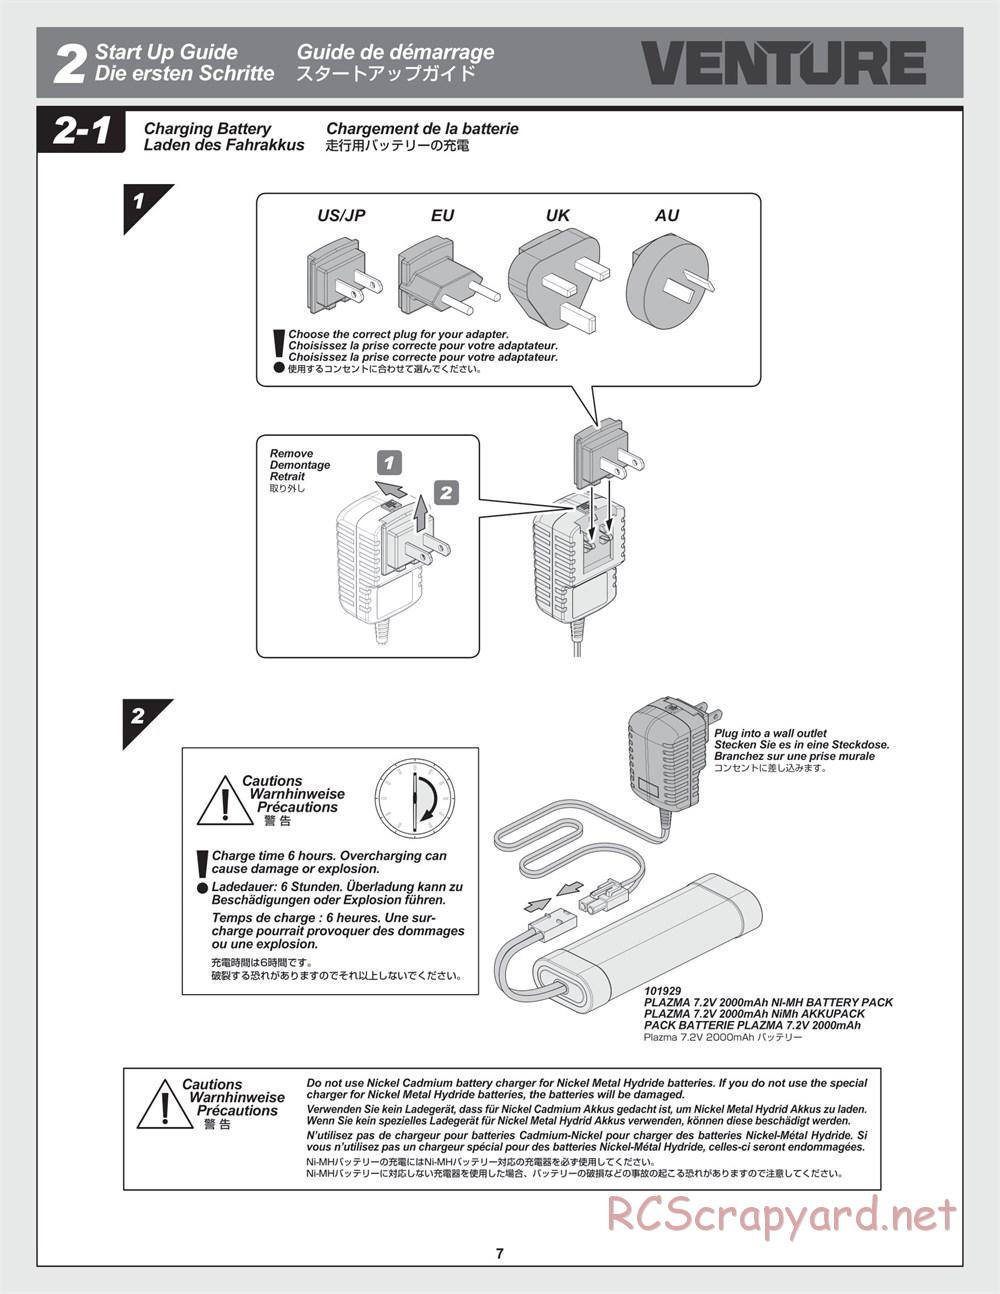 HPI - Venture Crawler - Manual - Page 7